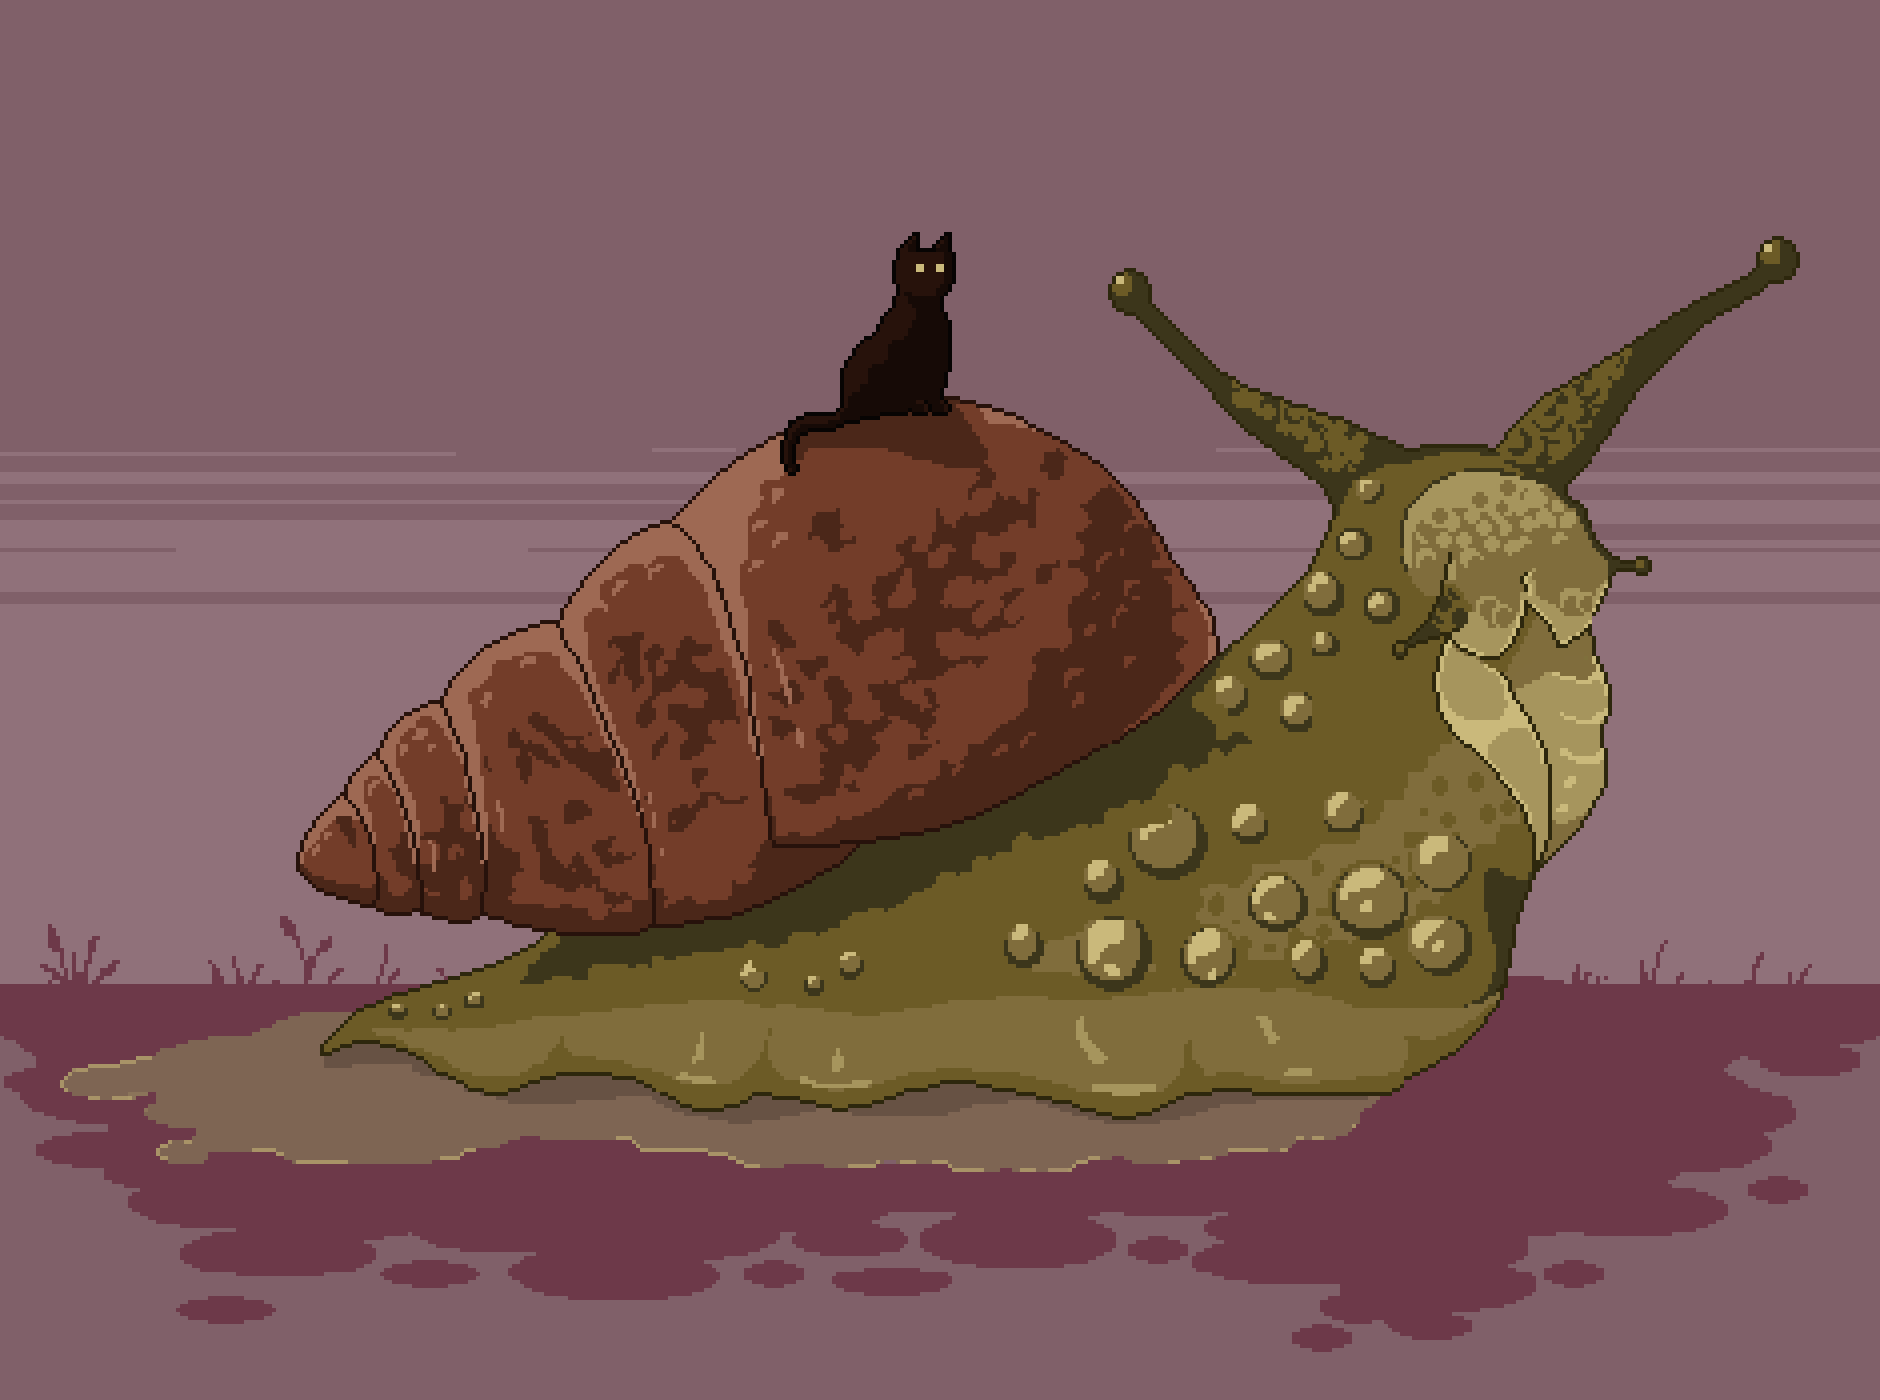 Giant snail